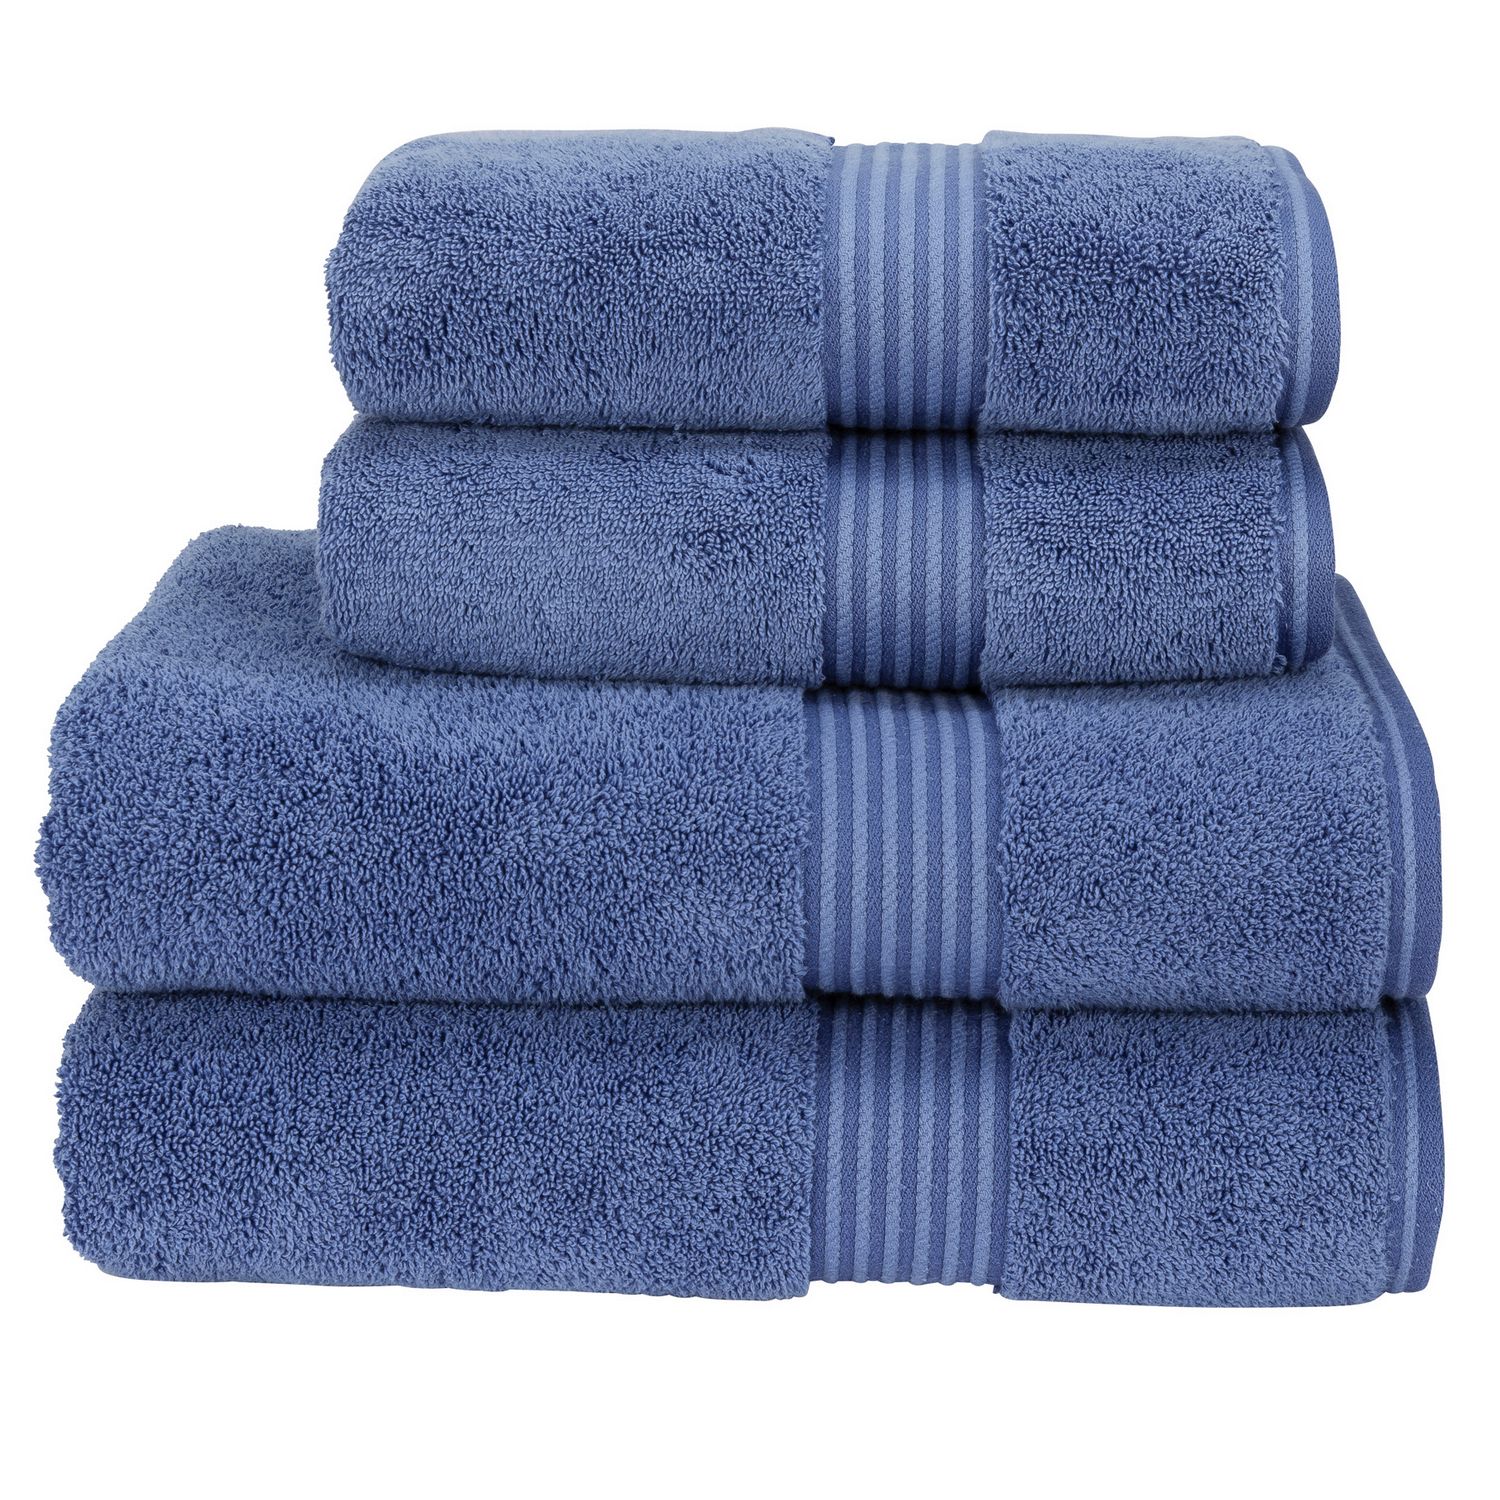 UUU Christy England Supreme Bath Towels